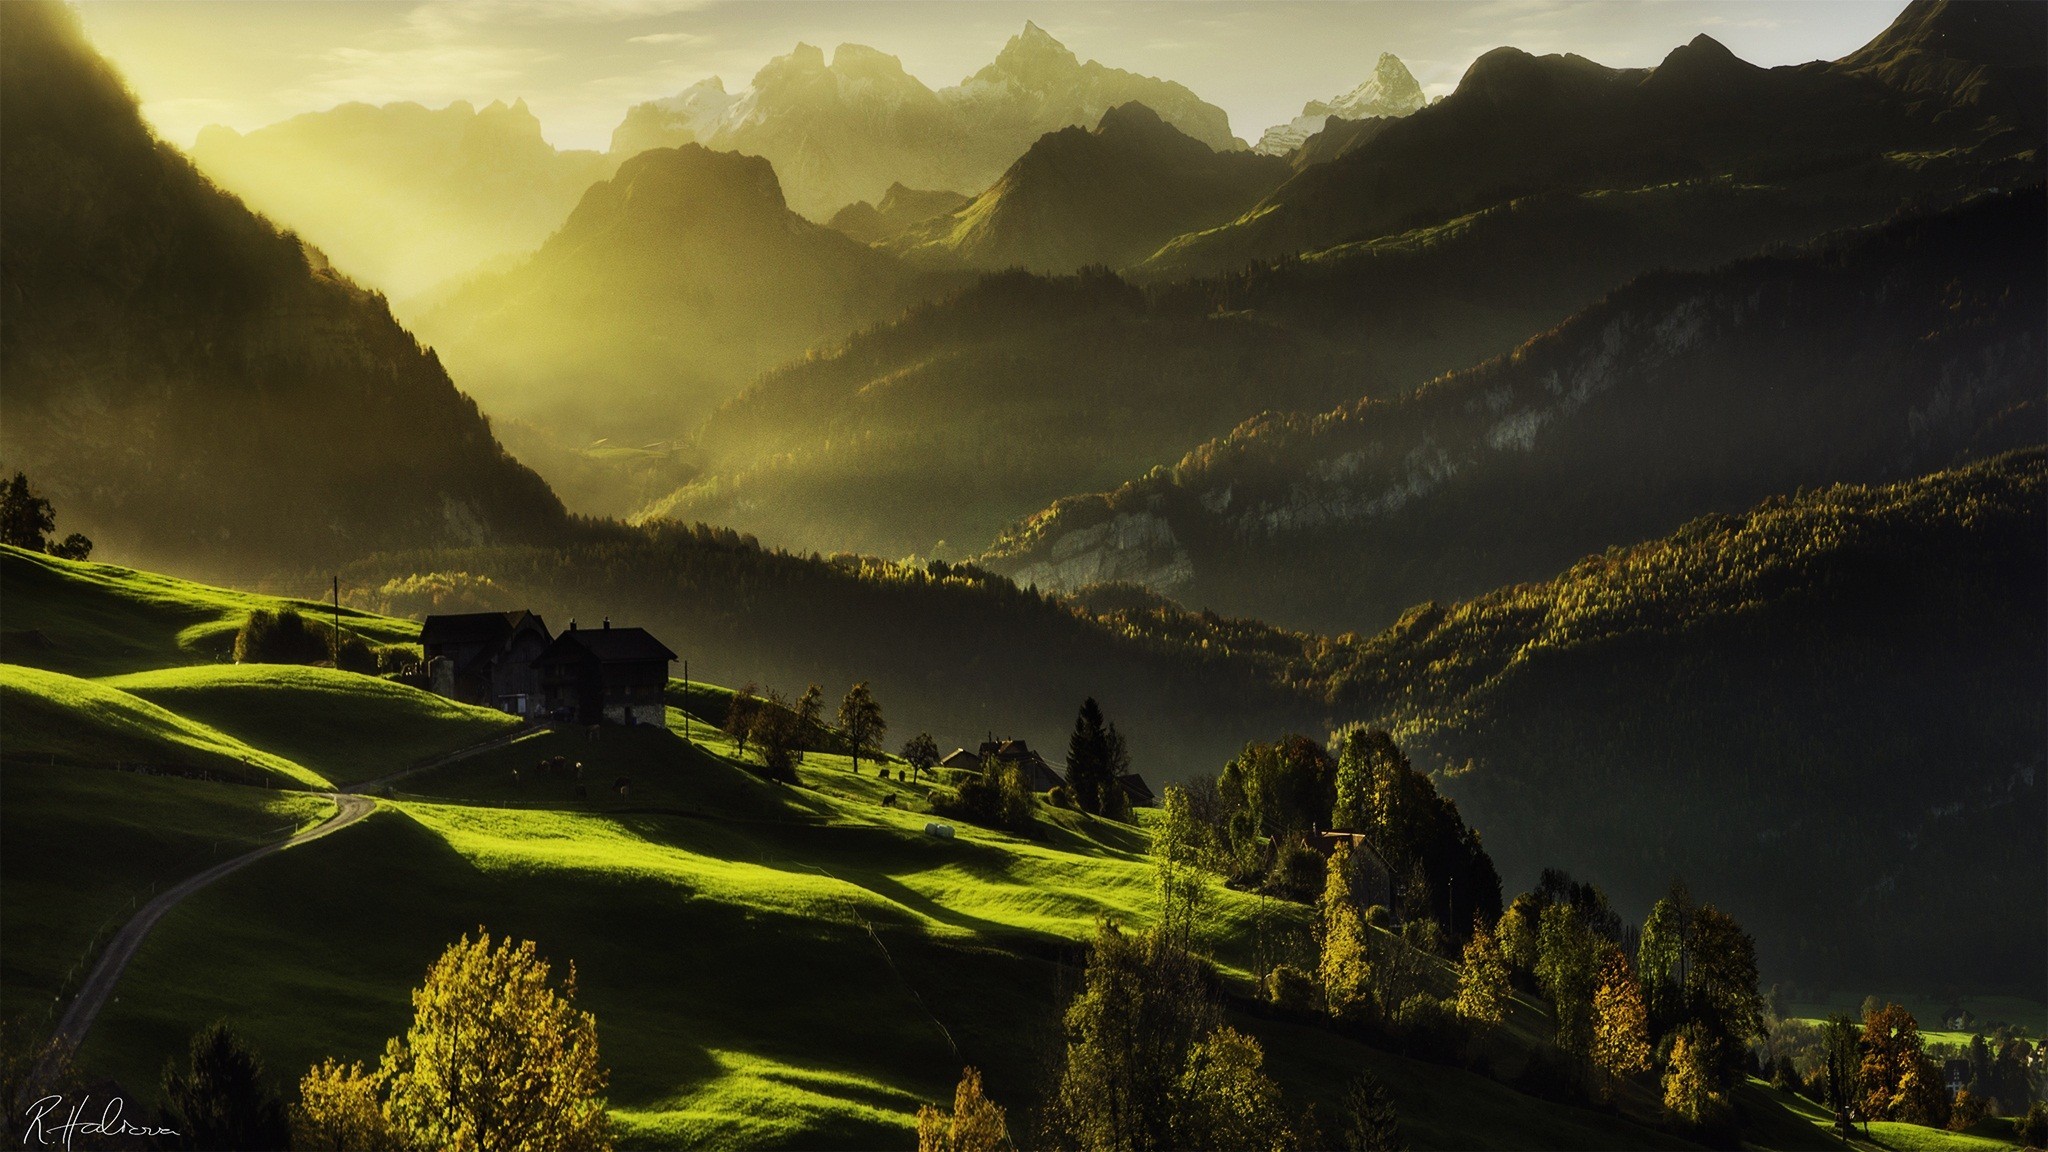 General 2048x1152 landscape nature mountains field sunlight Switzerland Alps